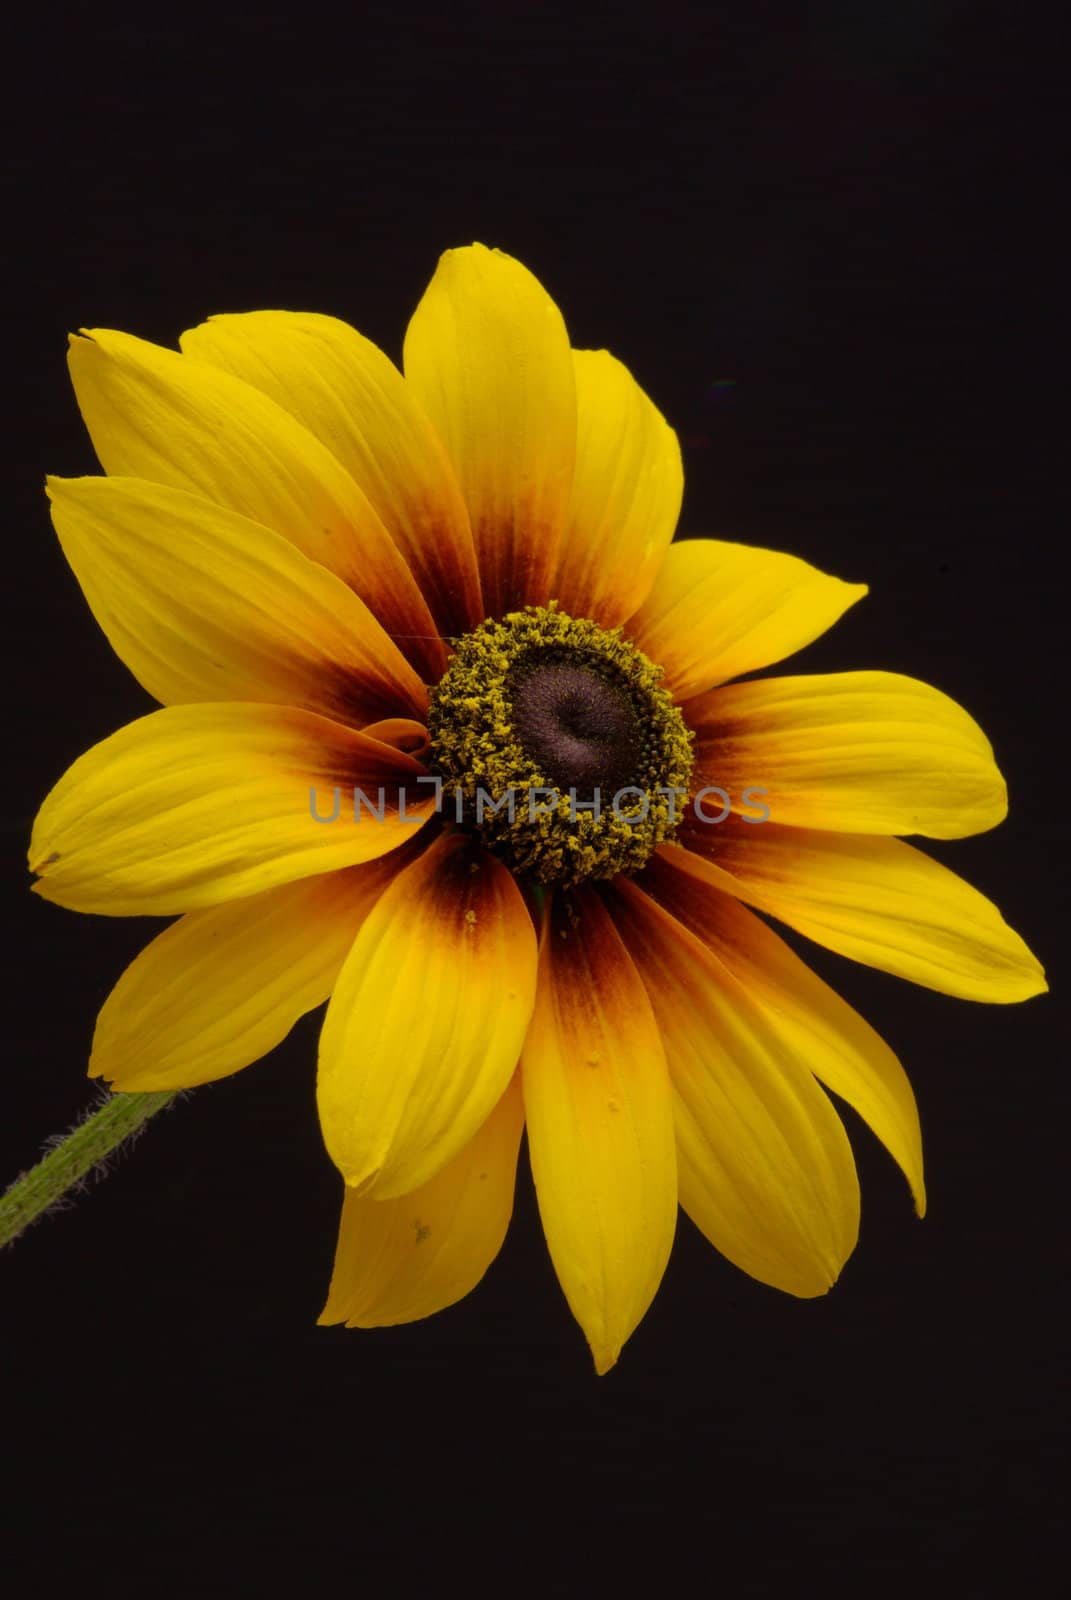 A single yellow Daisy (black-eyed Susan) on a dark background.